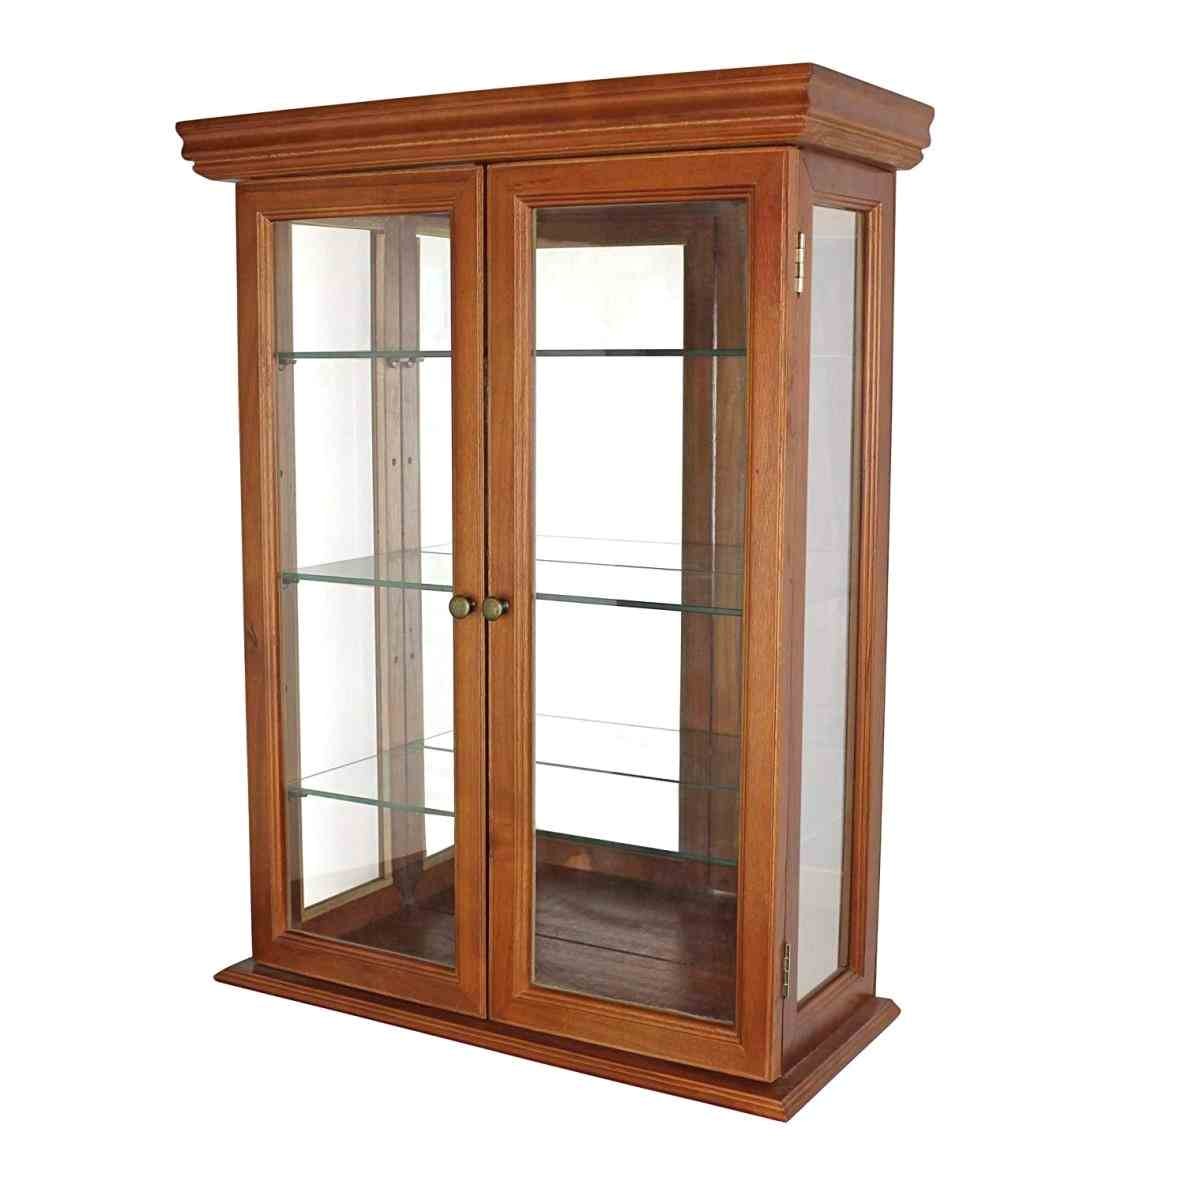 curio cabinets for sale curio cabinet oak ideas u designs short display and antique or define jpg